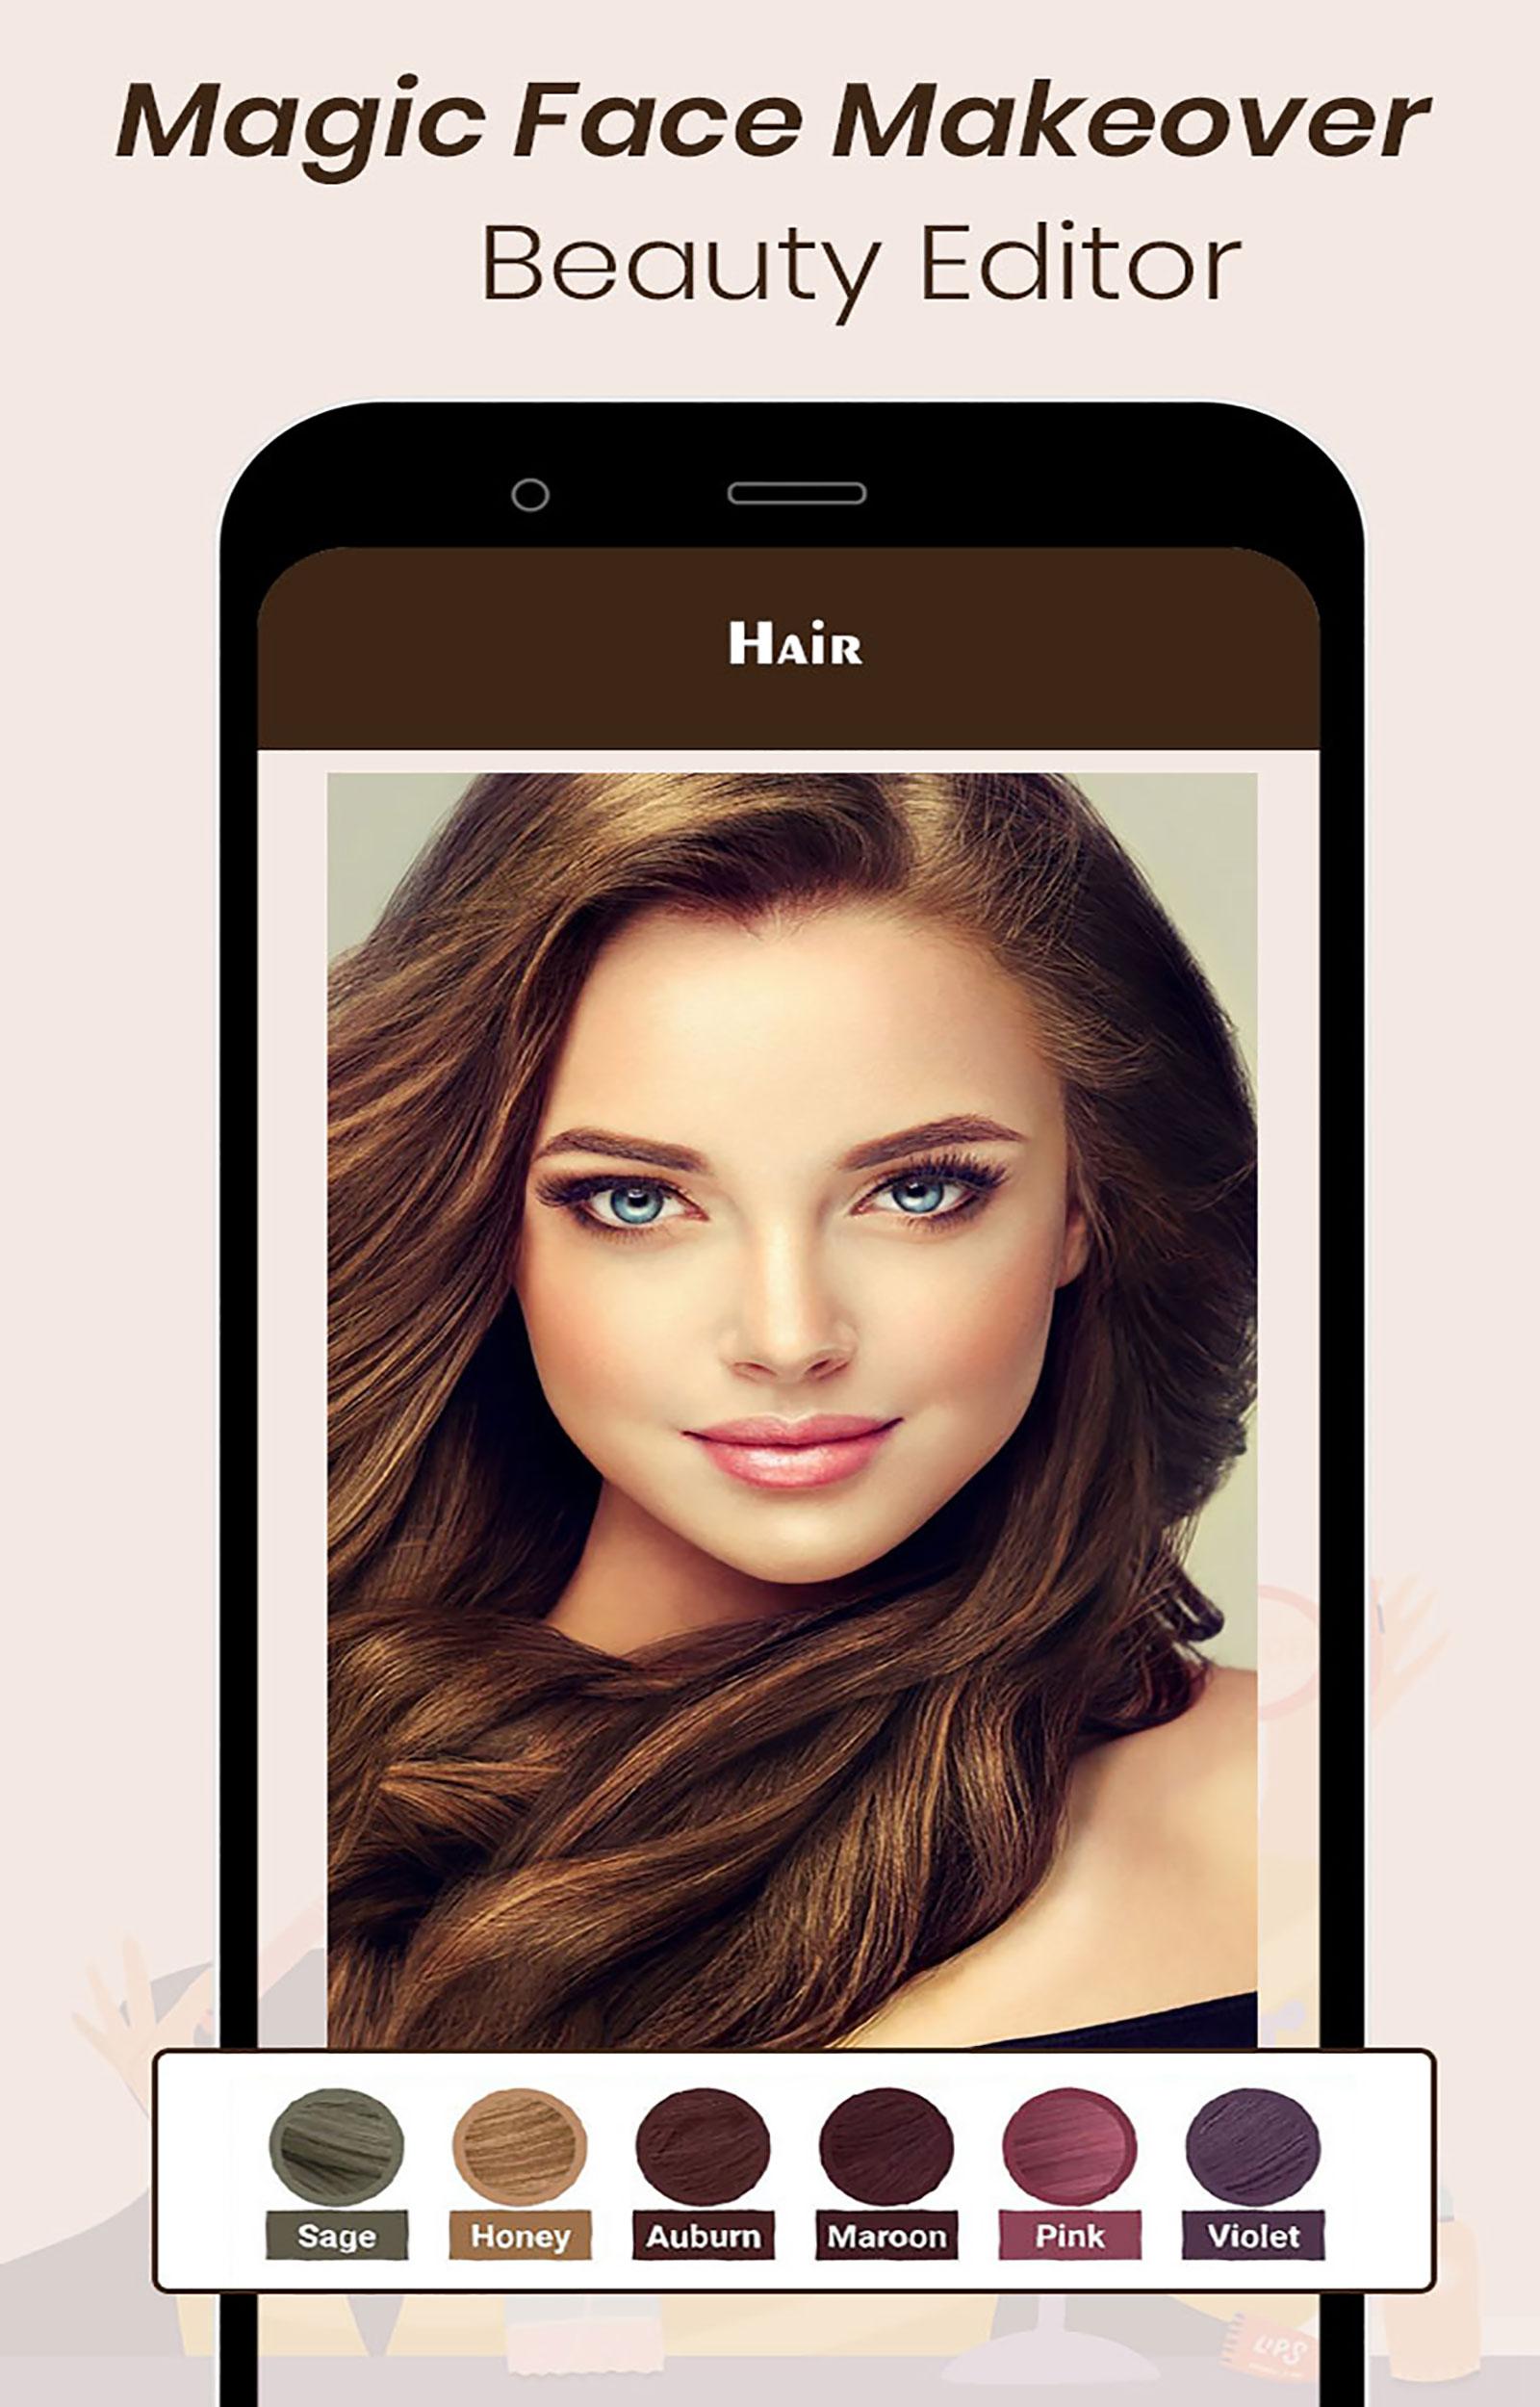 Magic Face Makeover - Beauty Editor 1.0 Screenshot 10